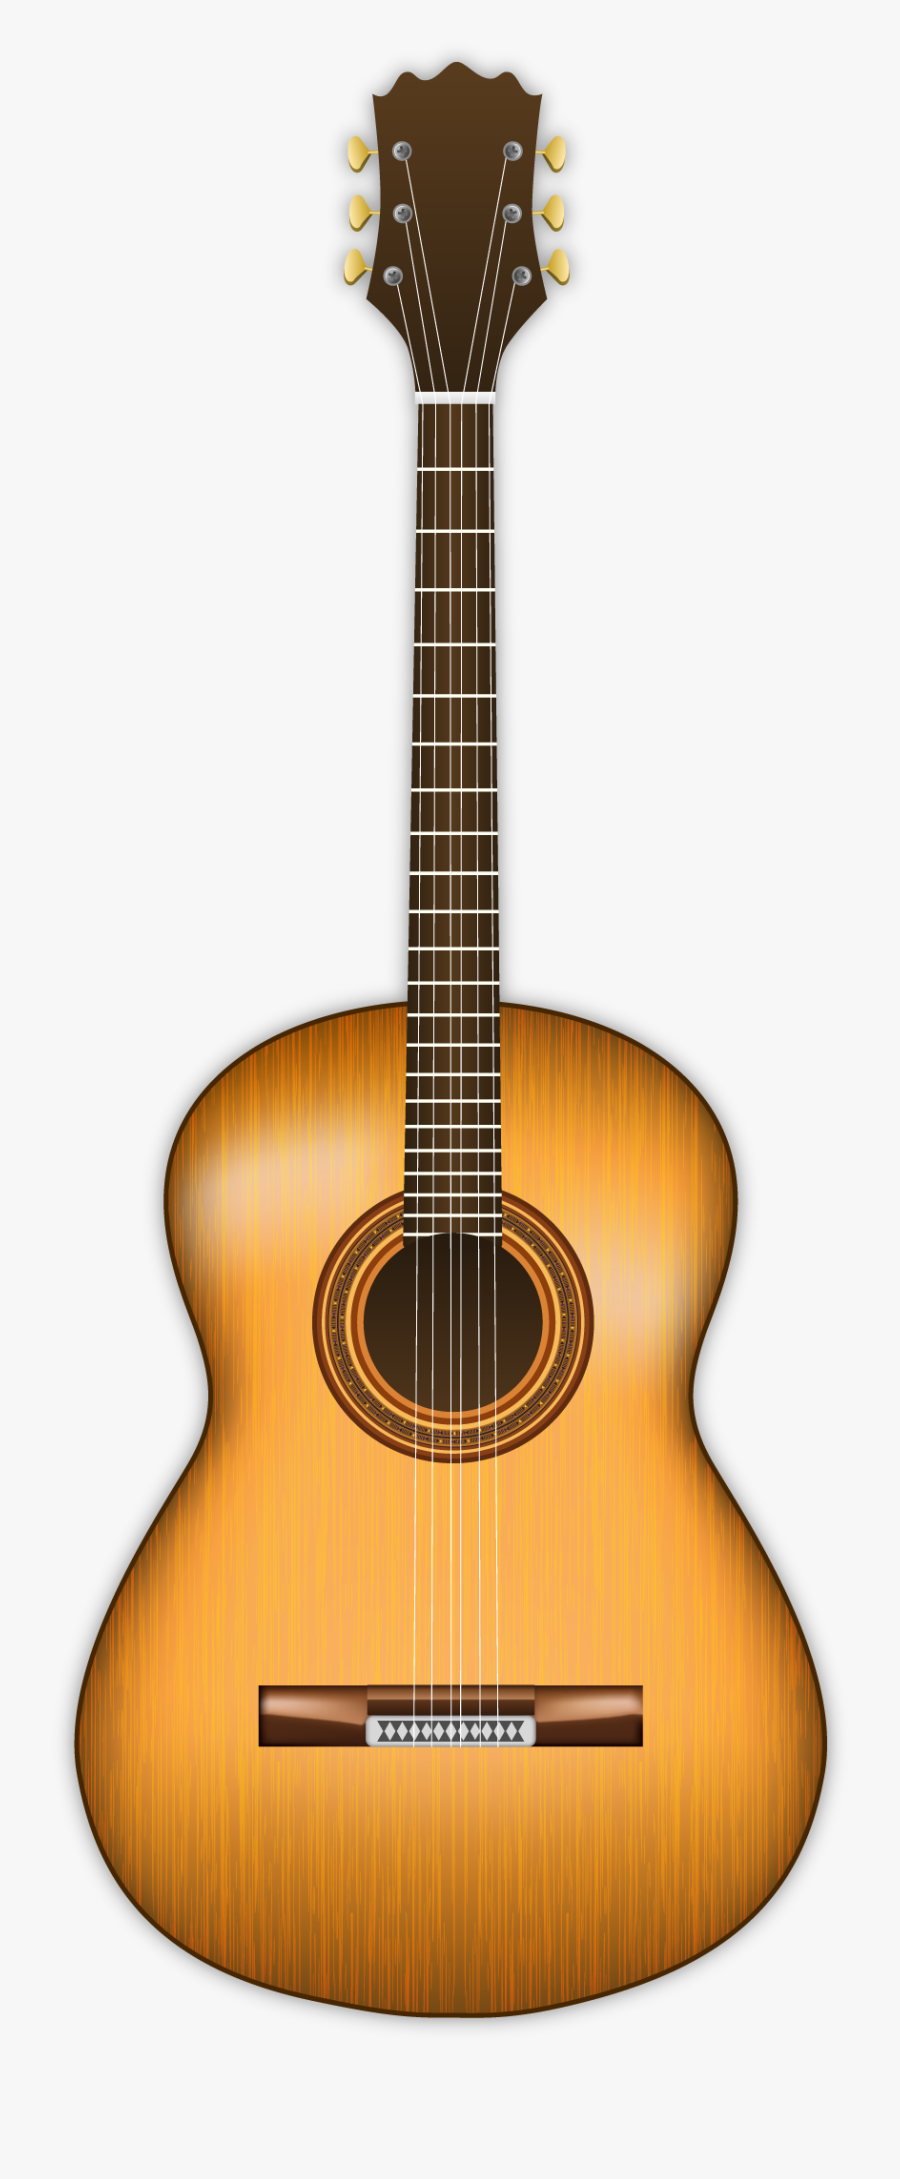 Guitar Clipart Png Image - Classical Parlor Guitar, Transparent Clipart